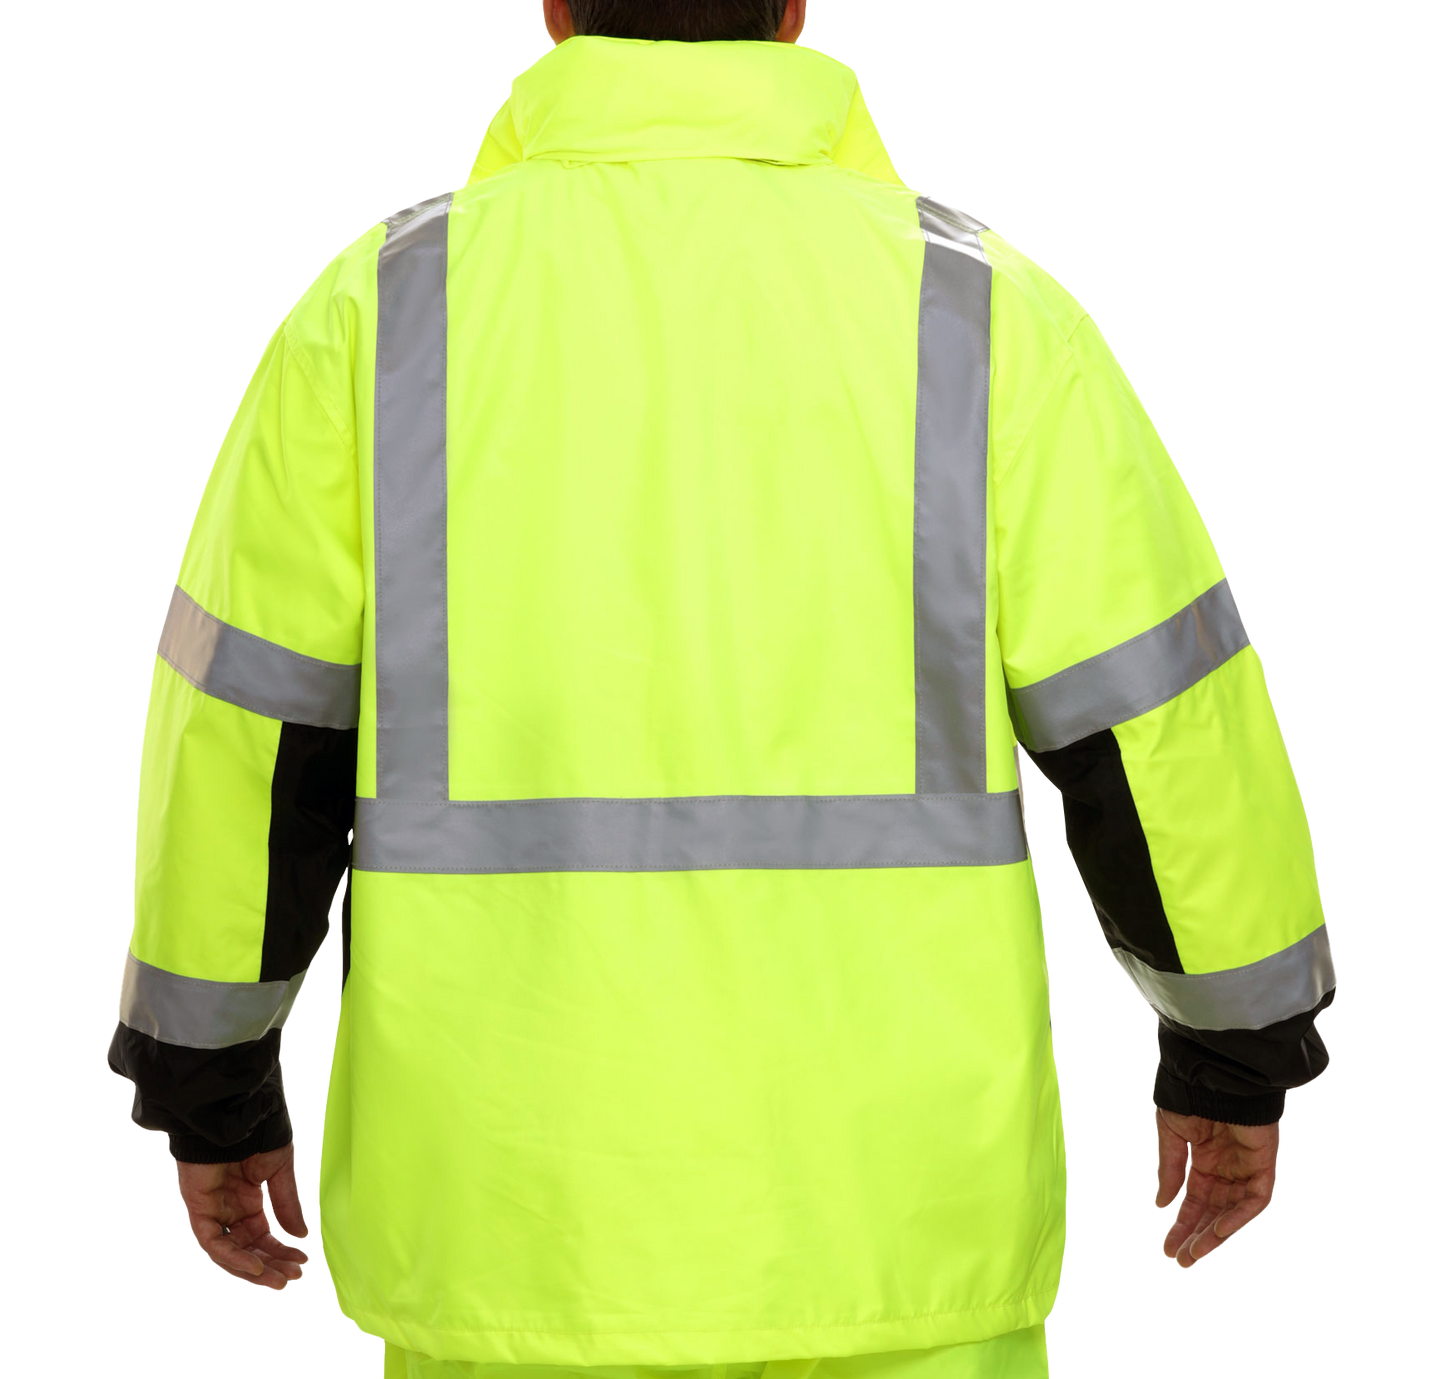 431STLB Safety Jacket: Hi-Vis Parka: Breathable Waterproof Hooded: 2-Tone Lime